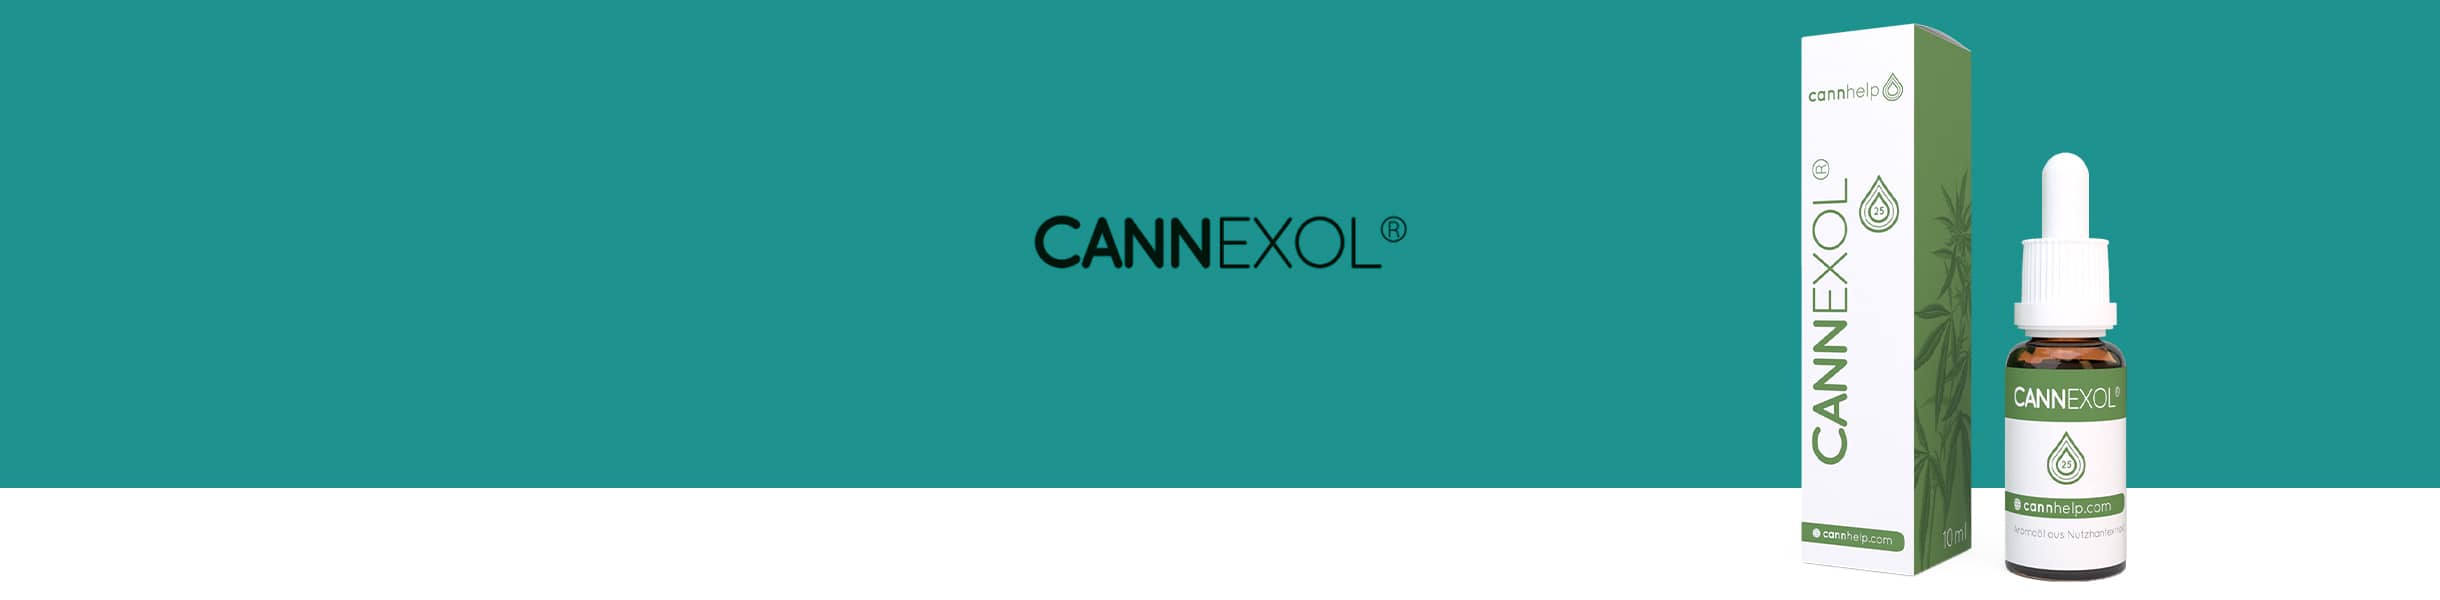 Cannexol Logo Onlineshop